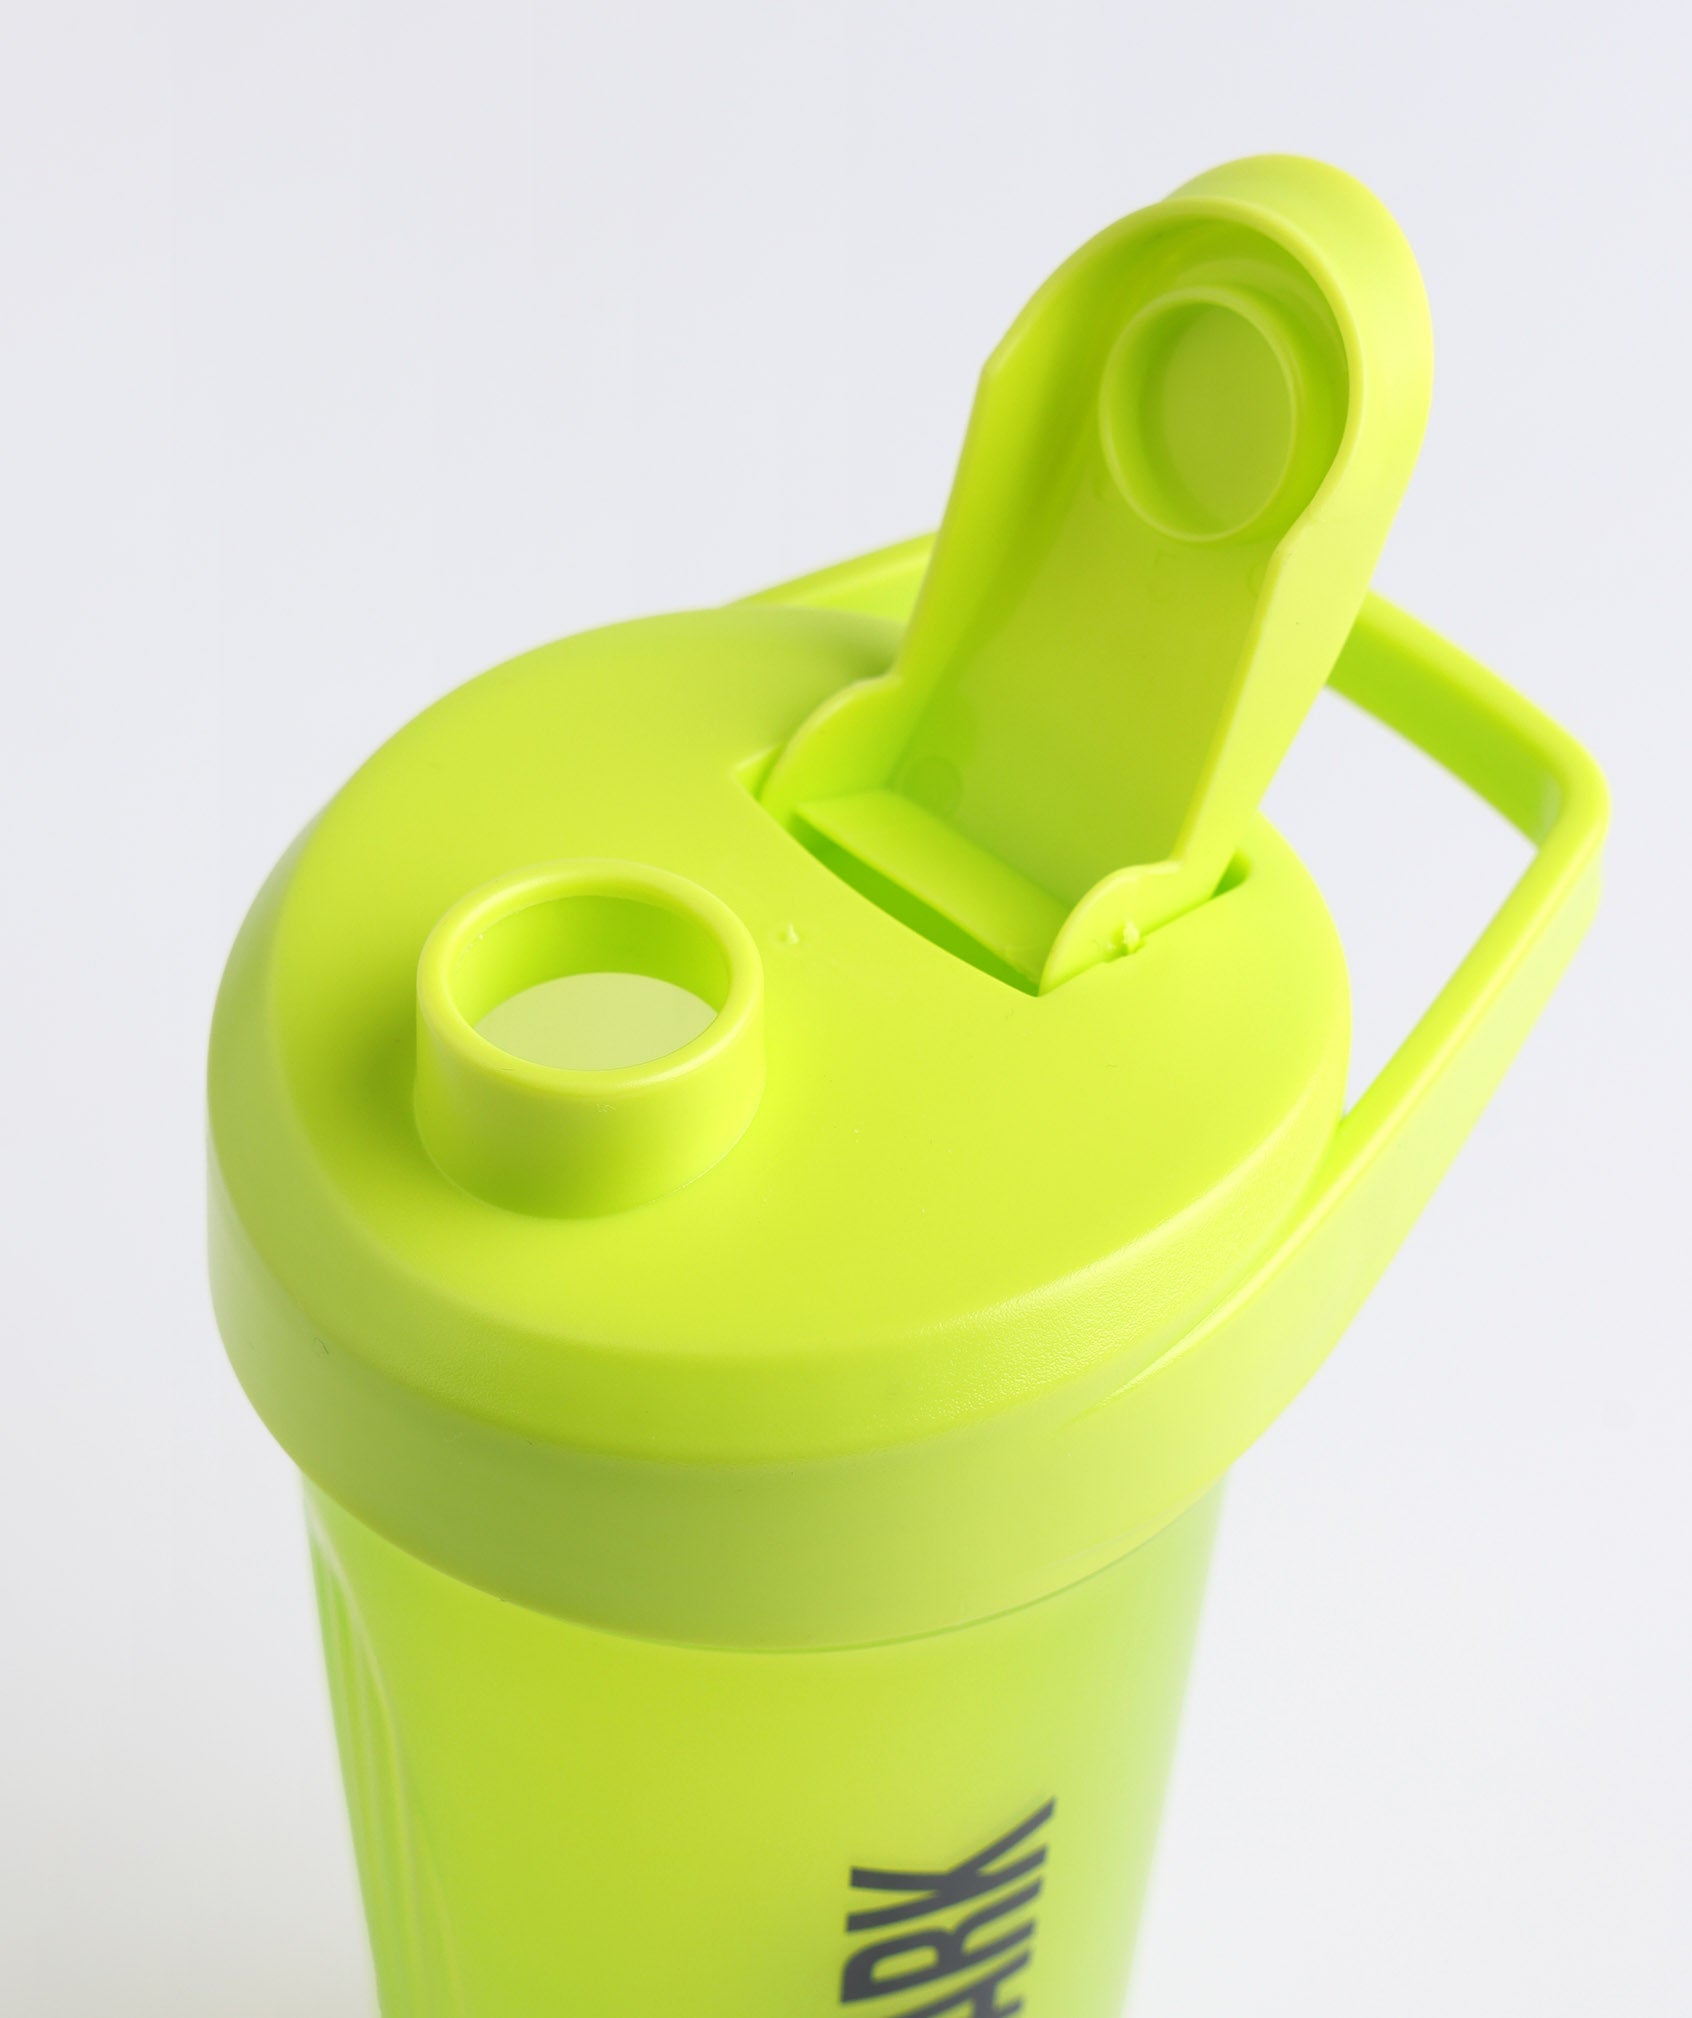 14oz Shaker Bottle in Fluo Lime - view 3